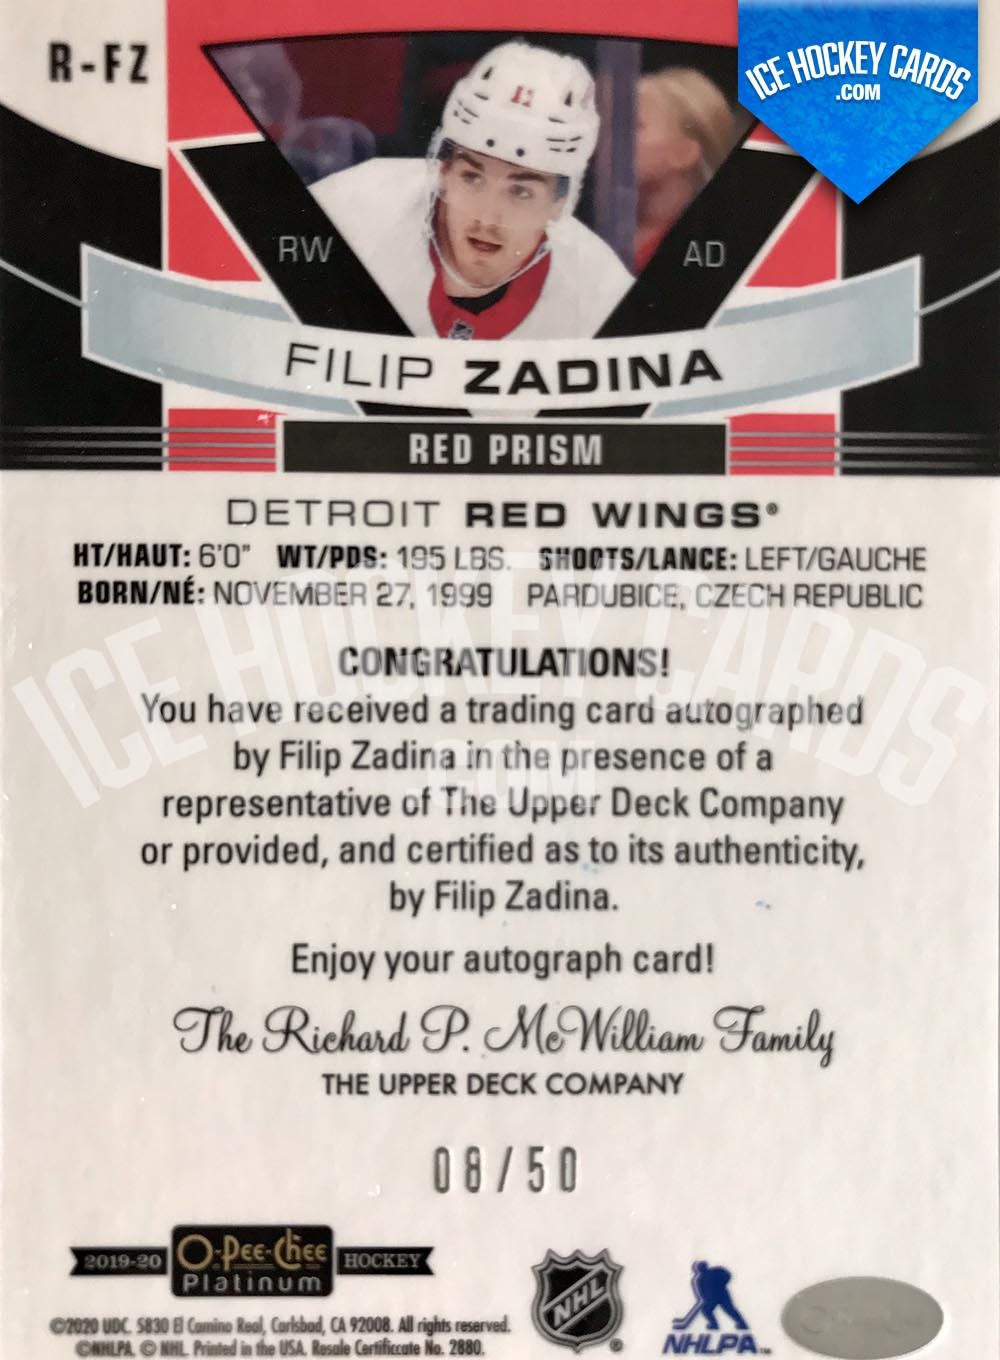 Upper Deck - OPC Platinum 2019-20 - Filip Zadina Rookie Autos Red Prism Autograph Card # to 50 RARE back